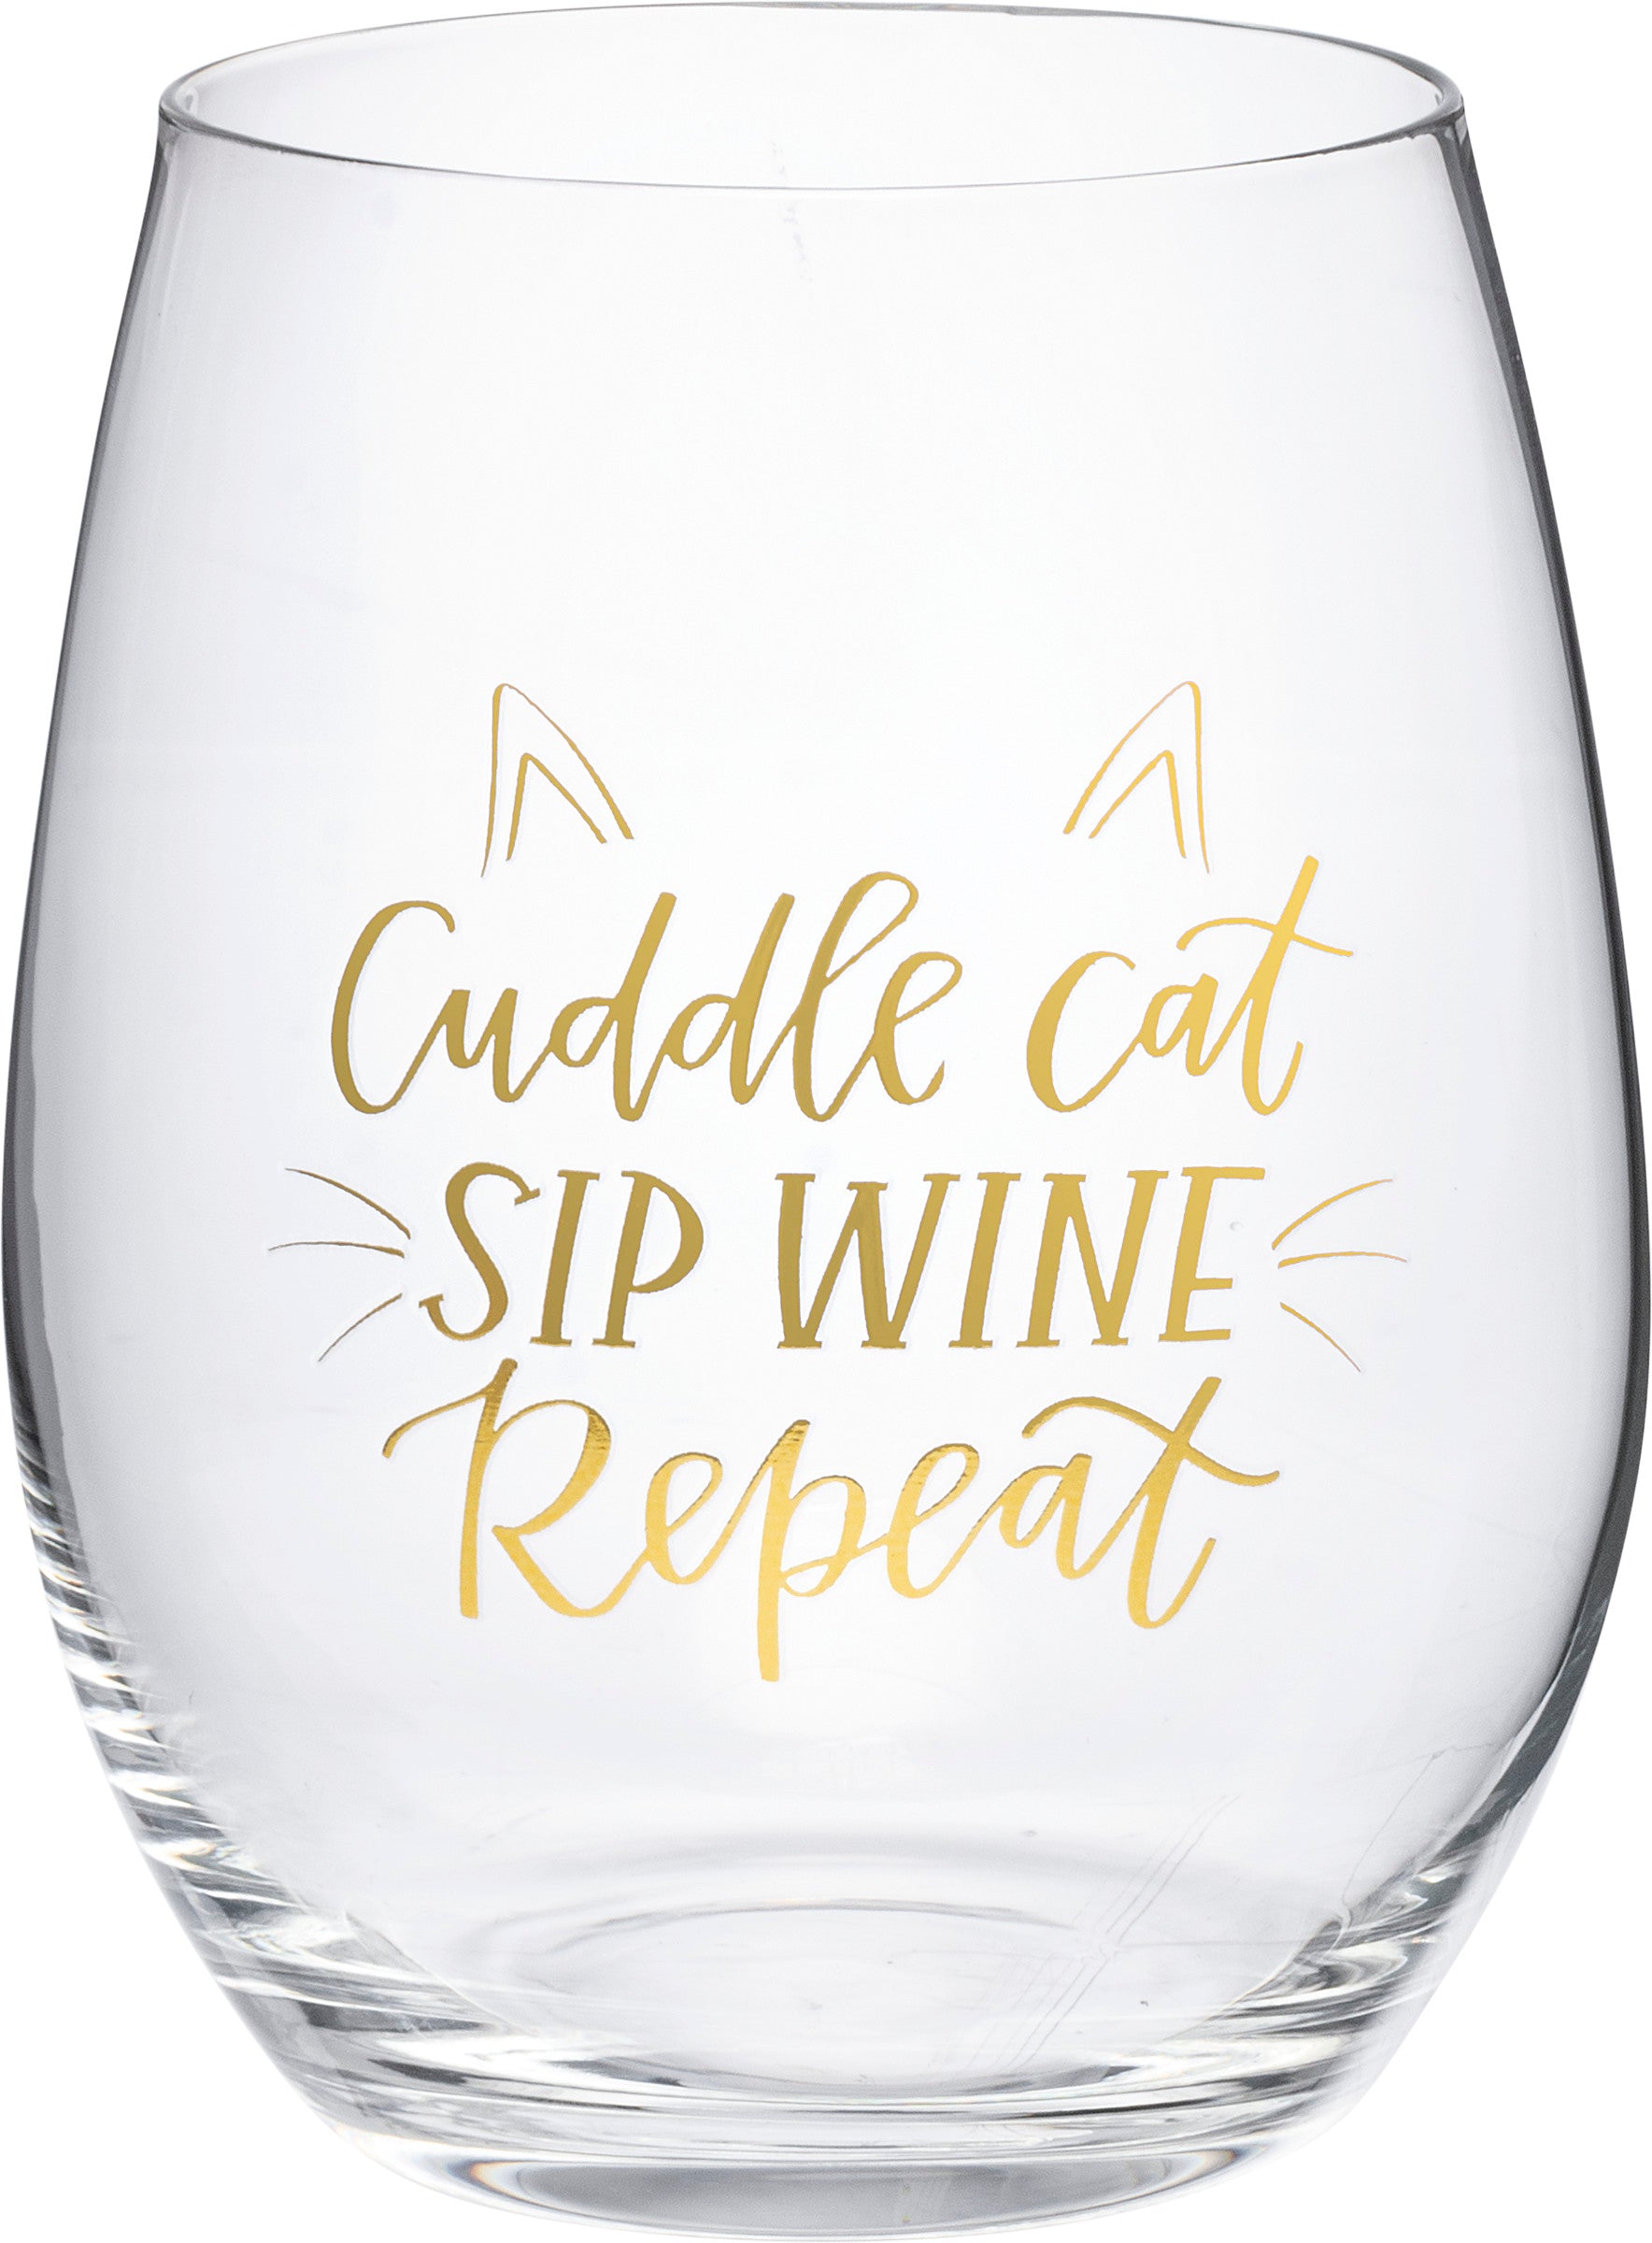 Cuddle Cat, Sip, Wine, Repeat | Wine Glass